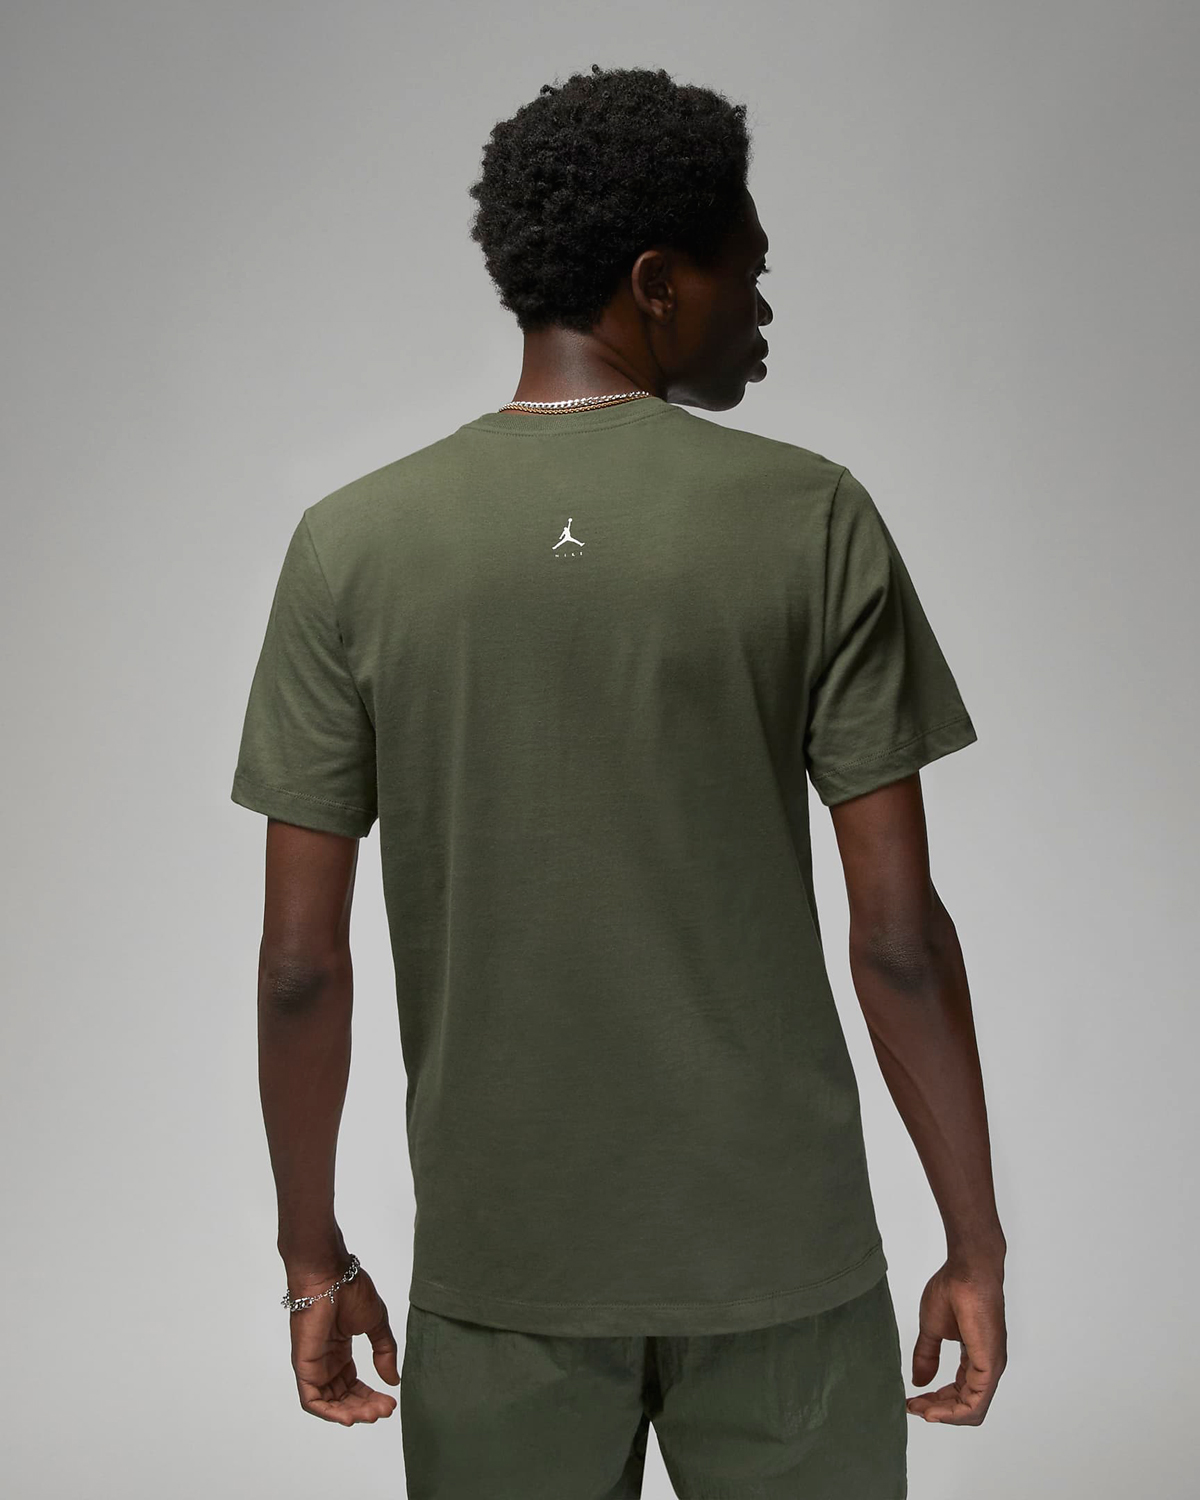 jordan-flight-mvp-t-shirt-cargo-khaki-infrared-2